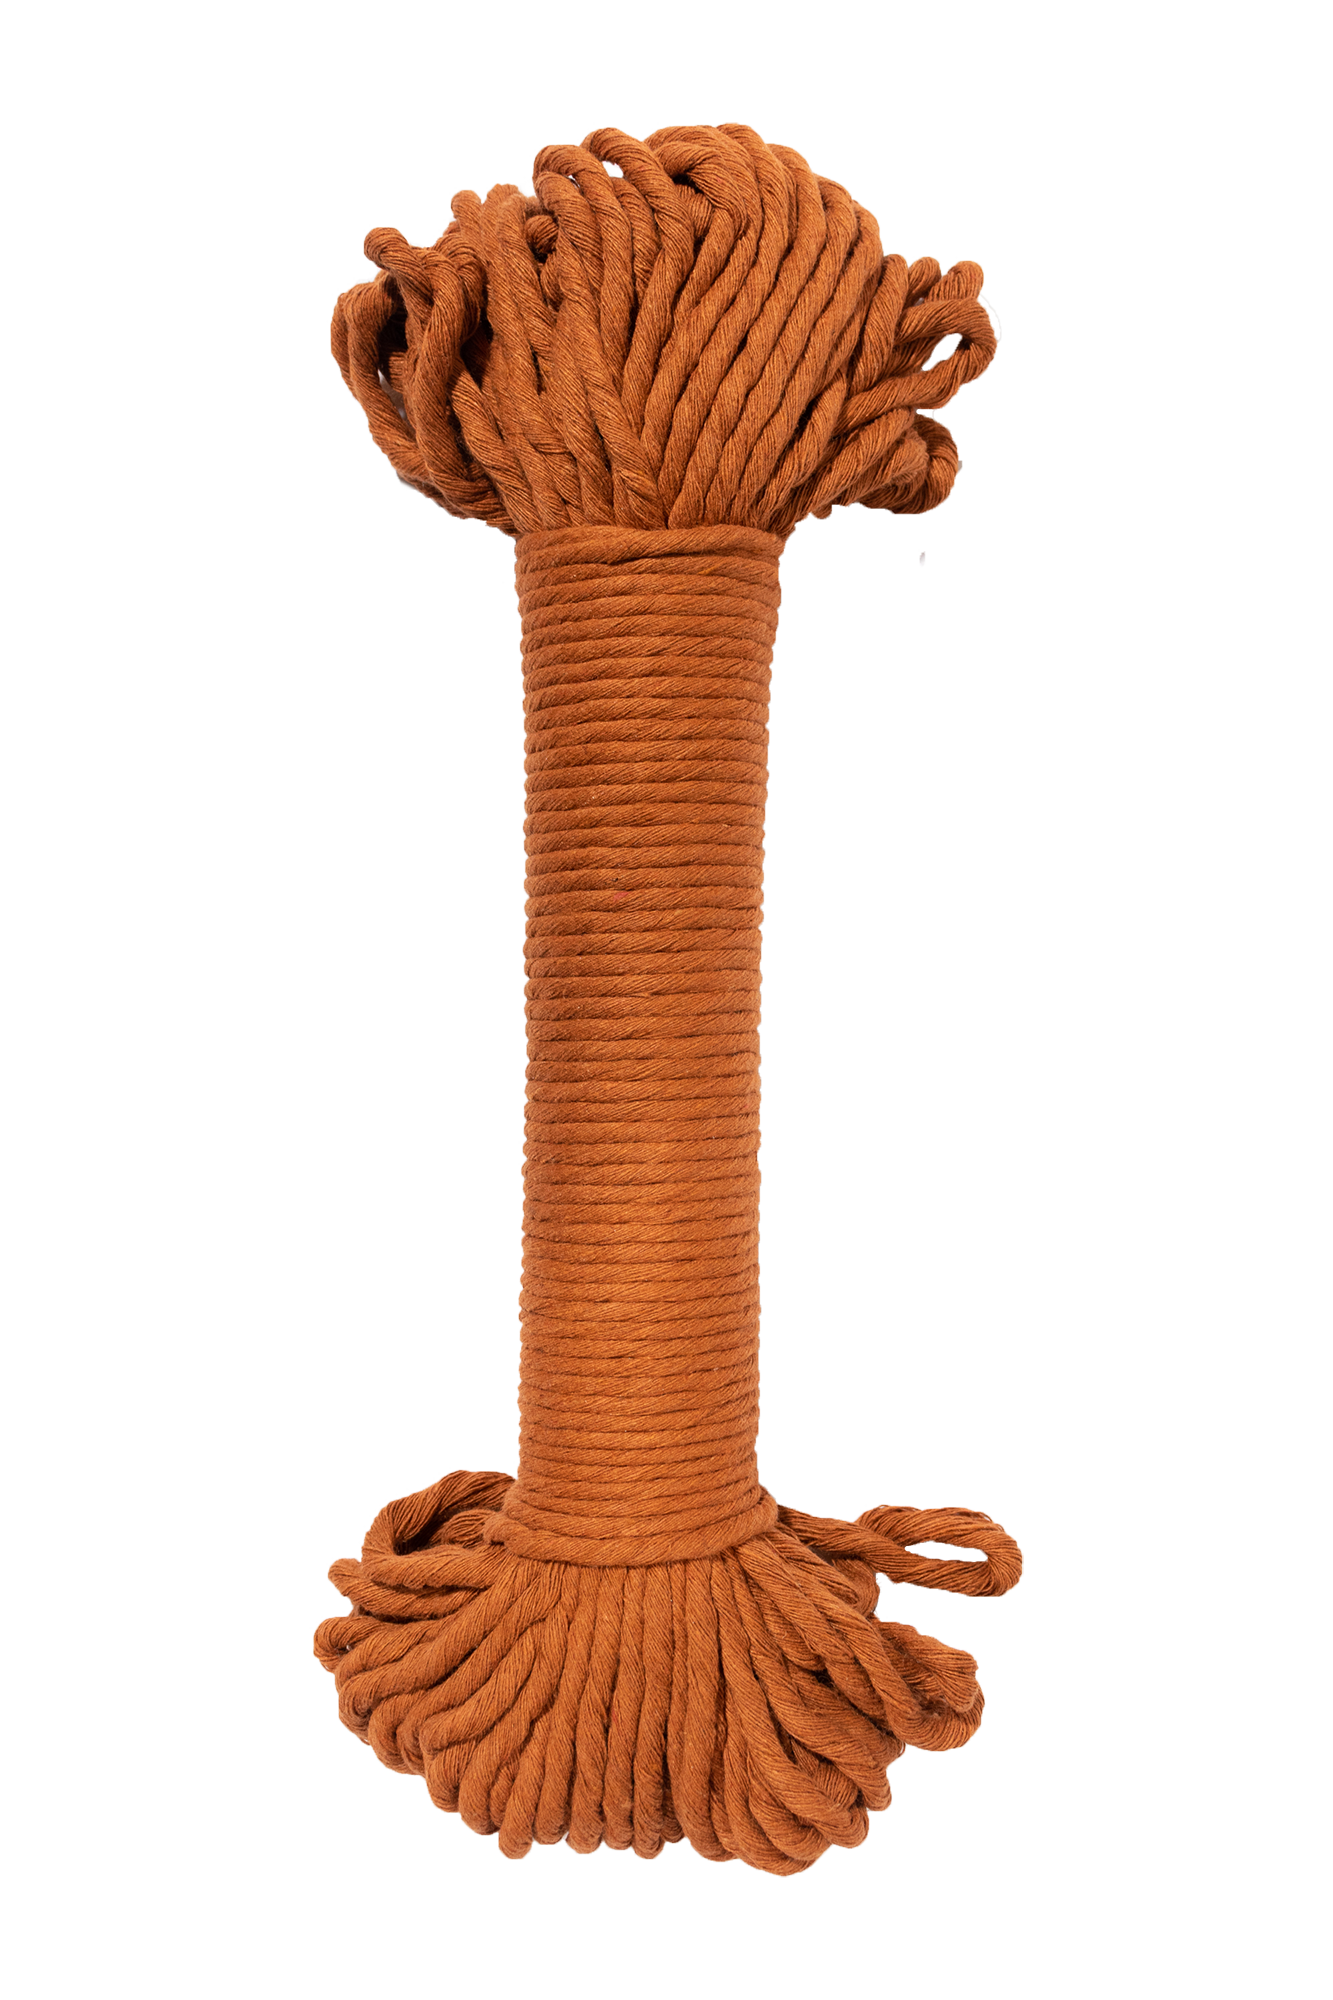 4mm Cotton String - Macrame Cord Natural by Modern Macramé